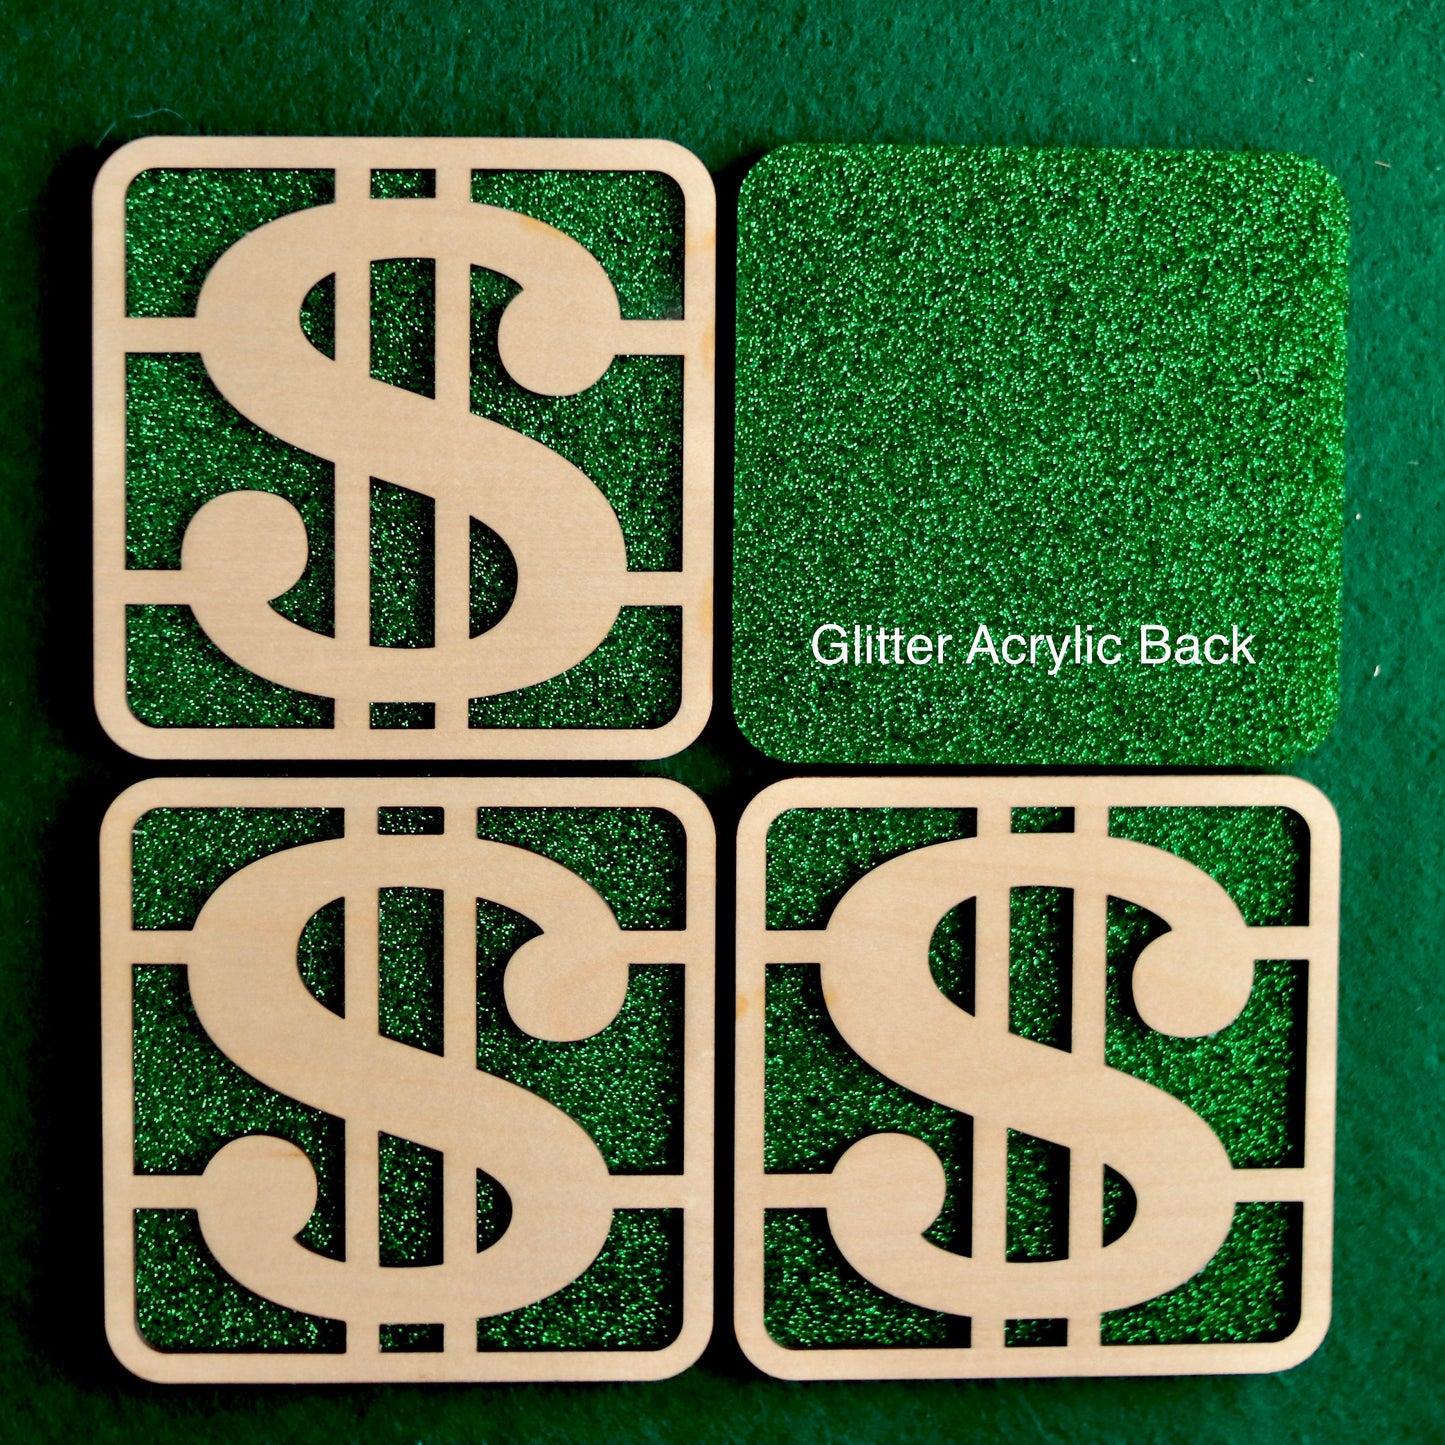 Casino Slot Players Coaster Set, Dollar Money Sign, Casino Theme Game Night, Poker Player Decor, Man Cave, Stocking Stuffer, Good Luck Green